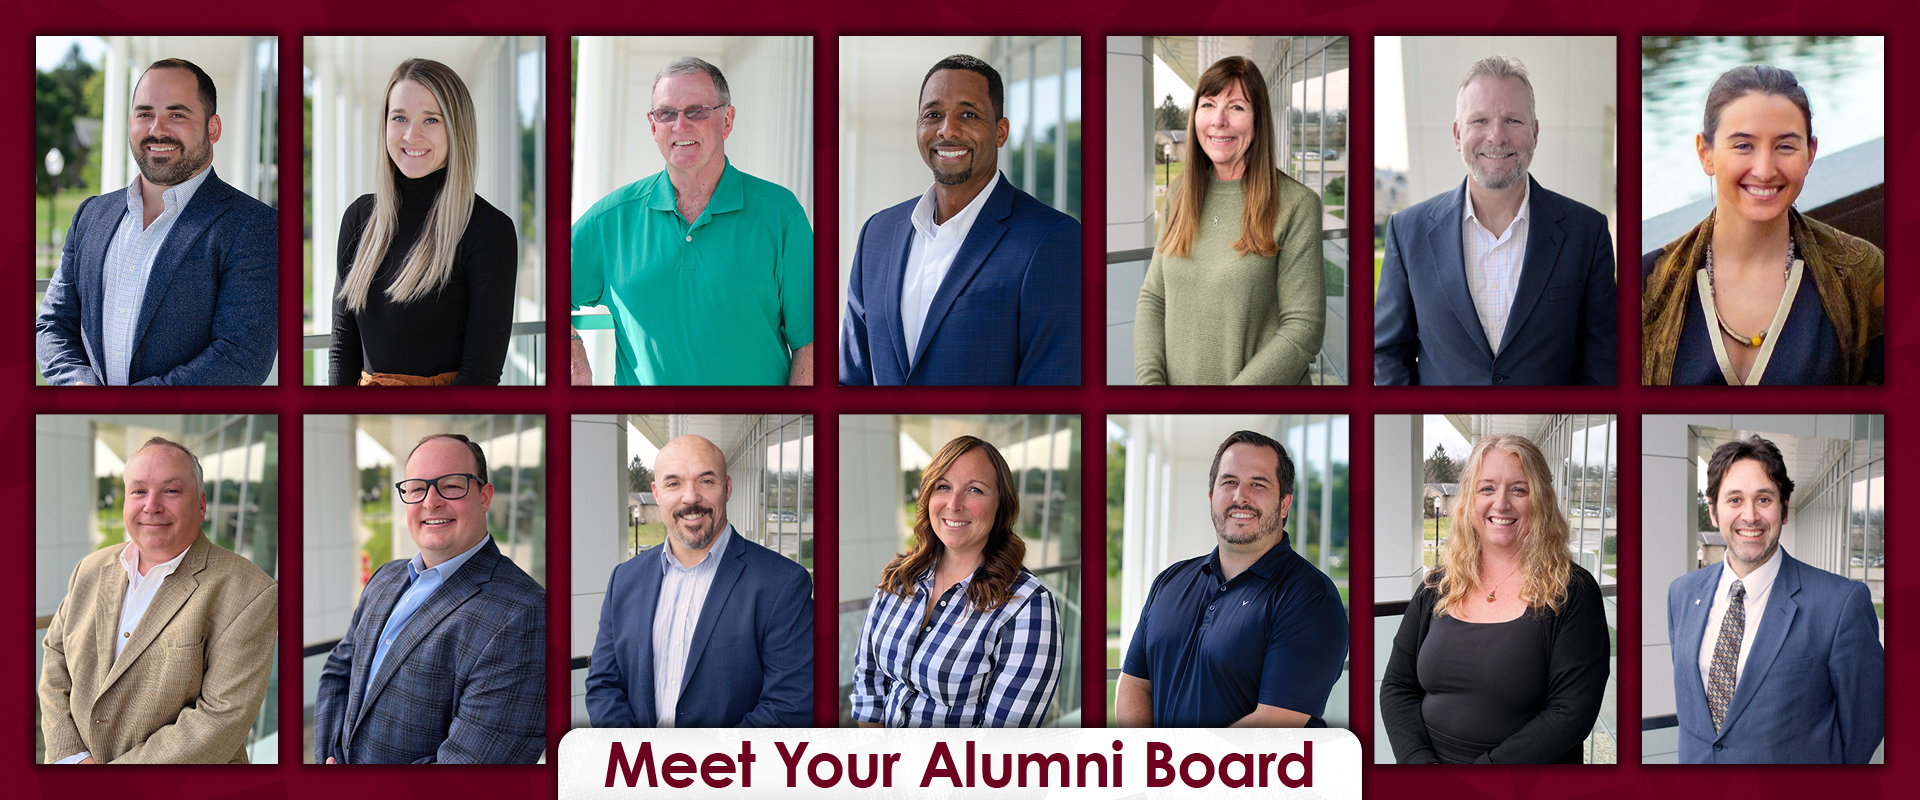 photo collage of the Alumni Board of Directors